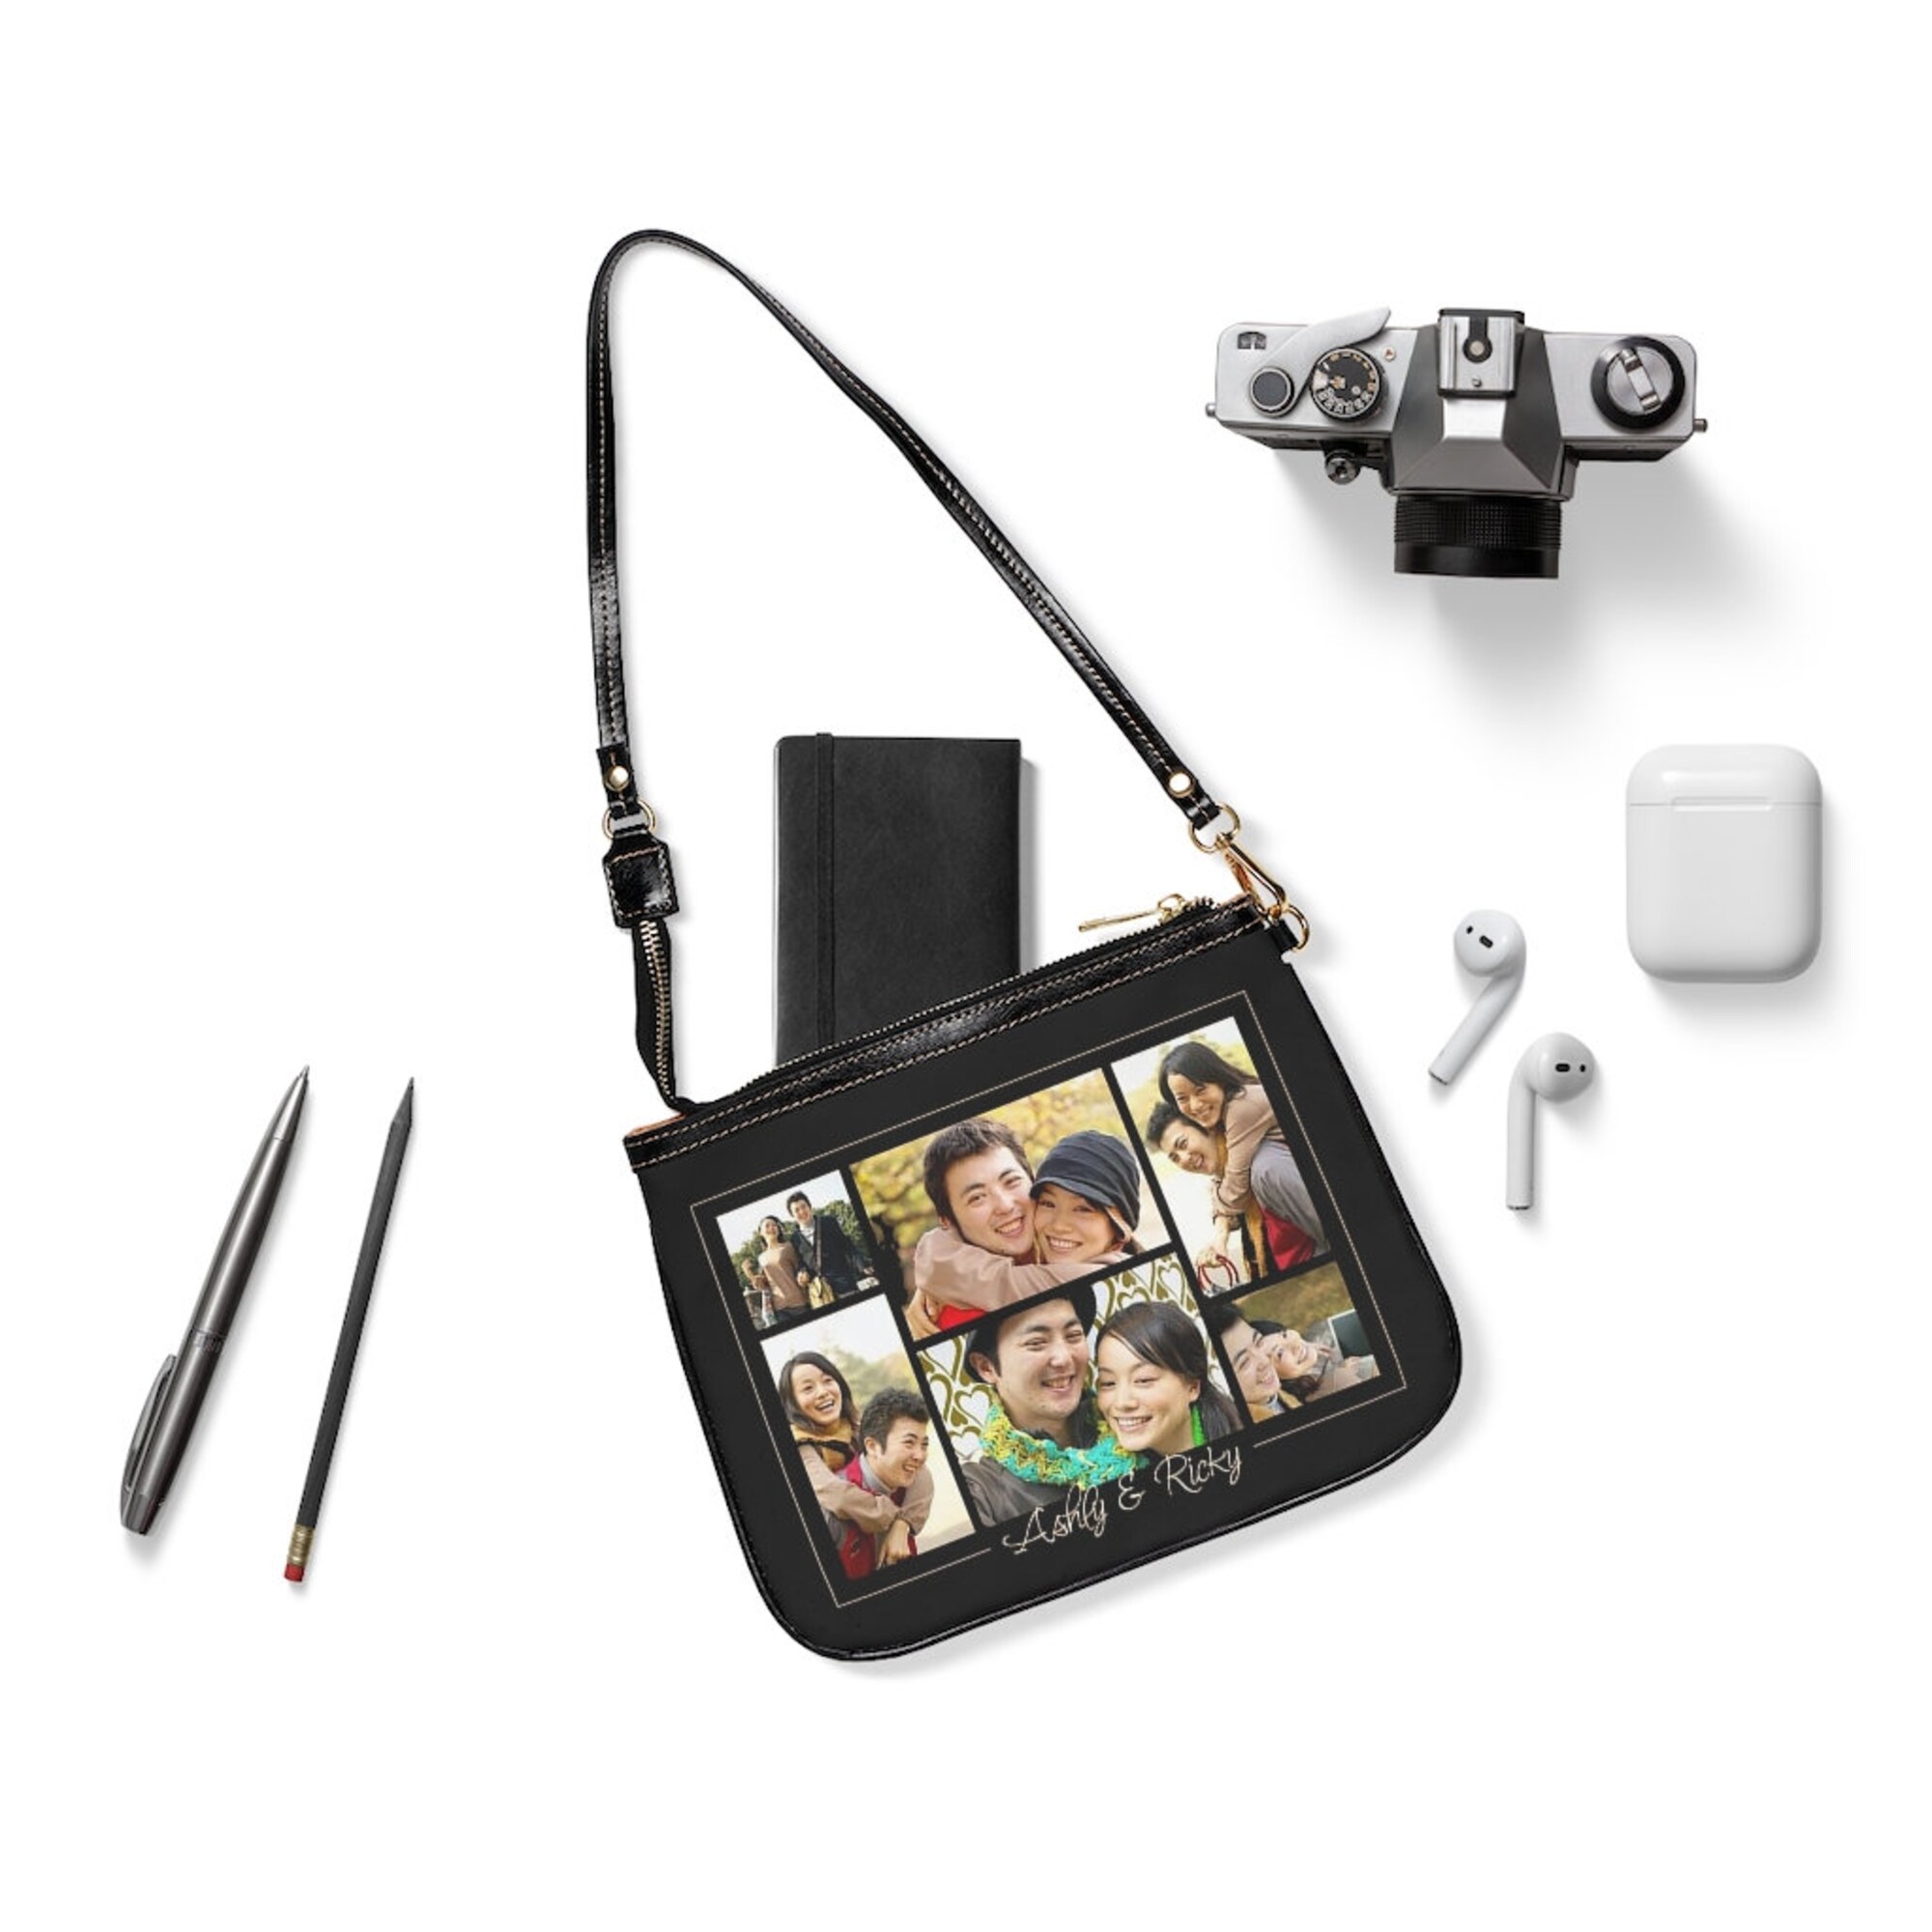 Small Shoulder Bag, custom bag, purse, custom purse, handbag